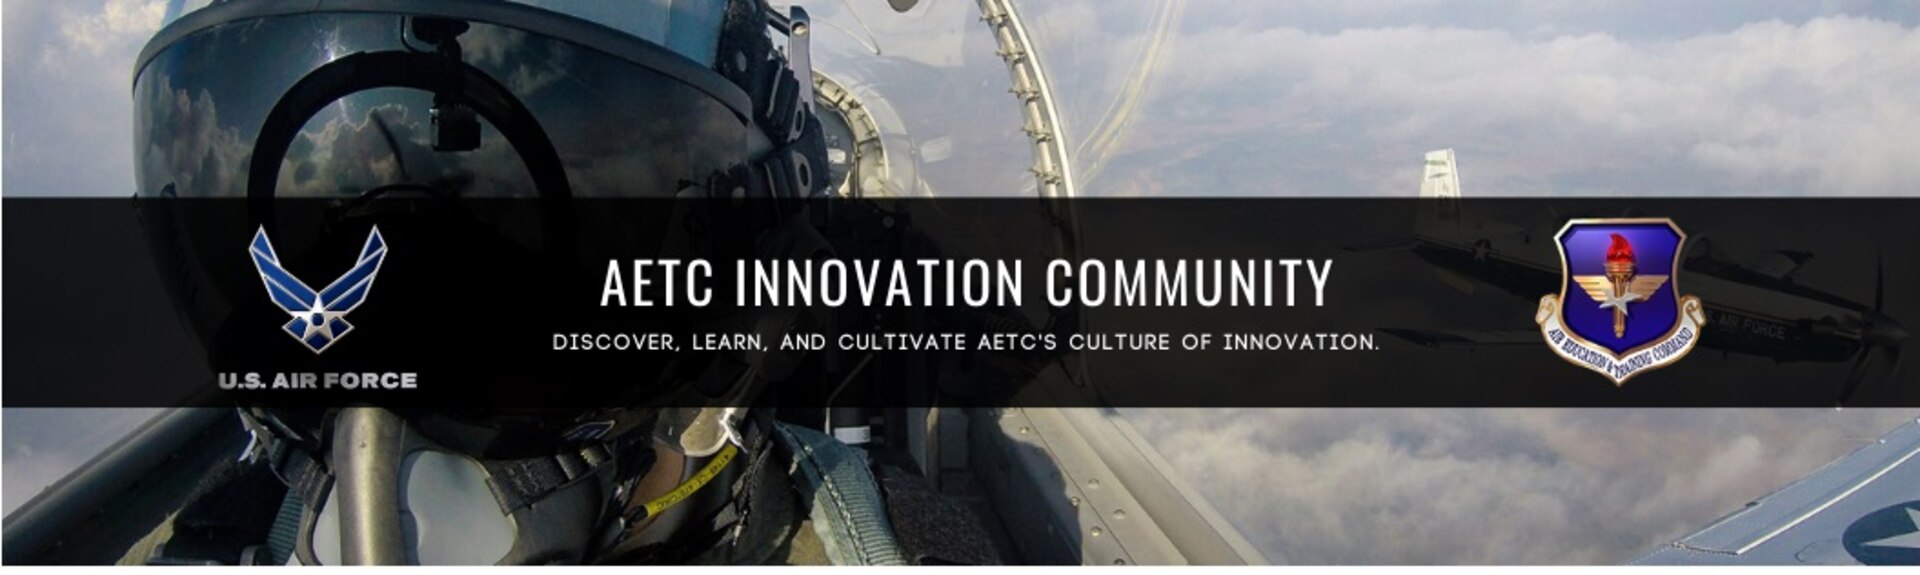 AETC Innovation Community